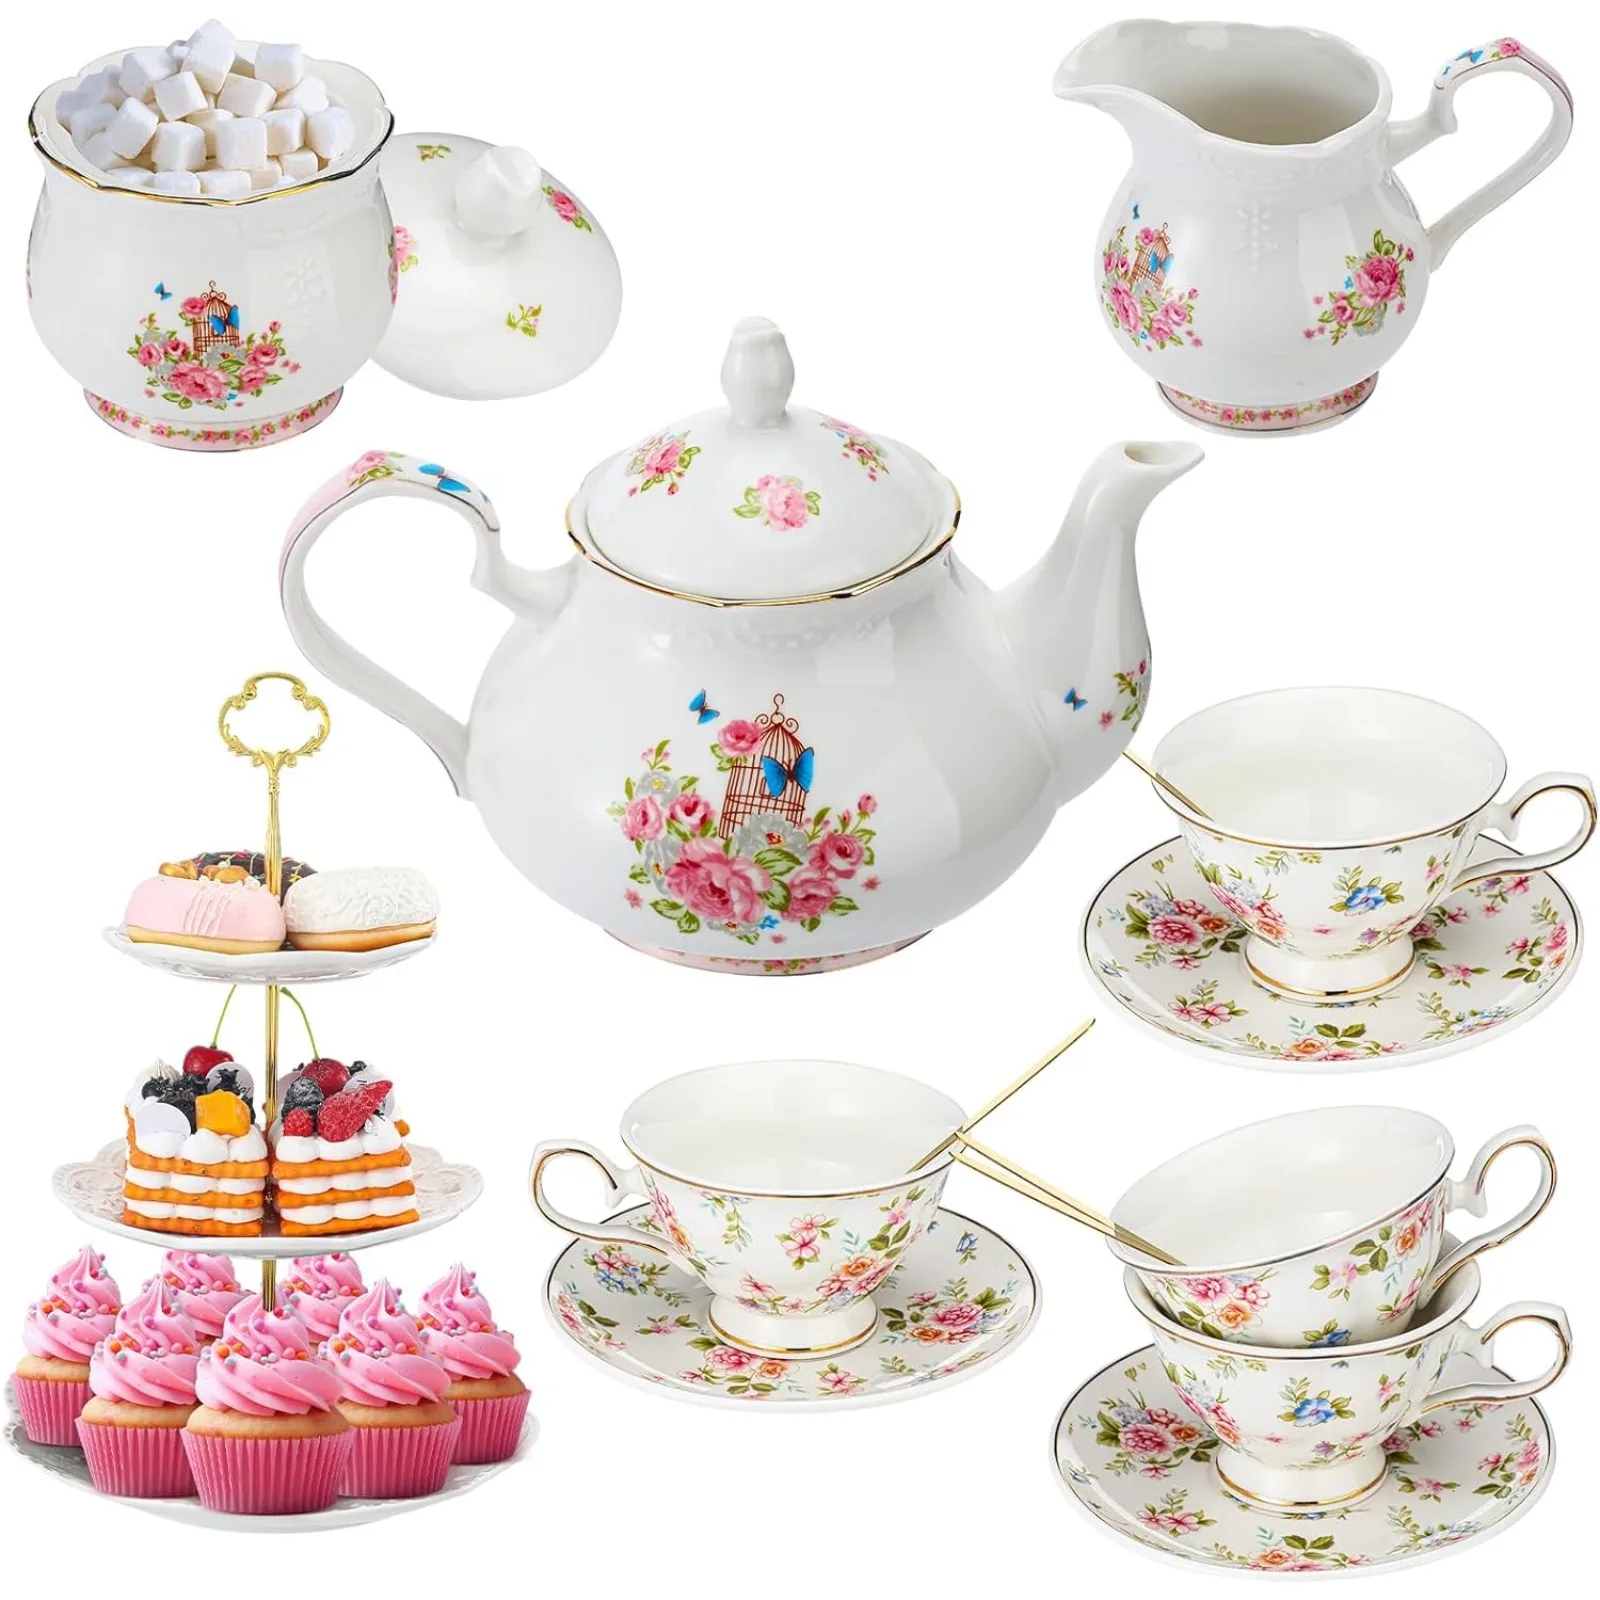 

US 16 Pcs Porcelain Tea Party Set Floral Ceramic Coffee Gift Sets with 3 Tier Cupcake Stand Tea Cup Teapot Set Party Favor